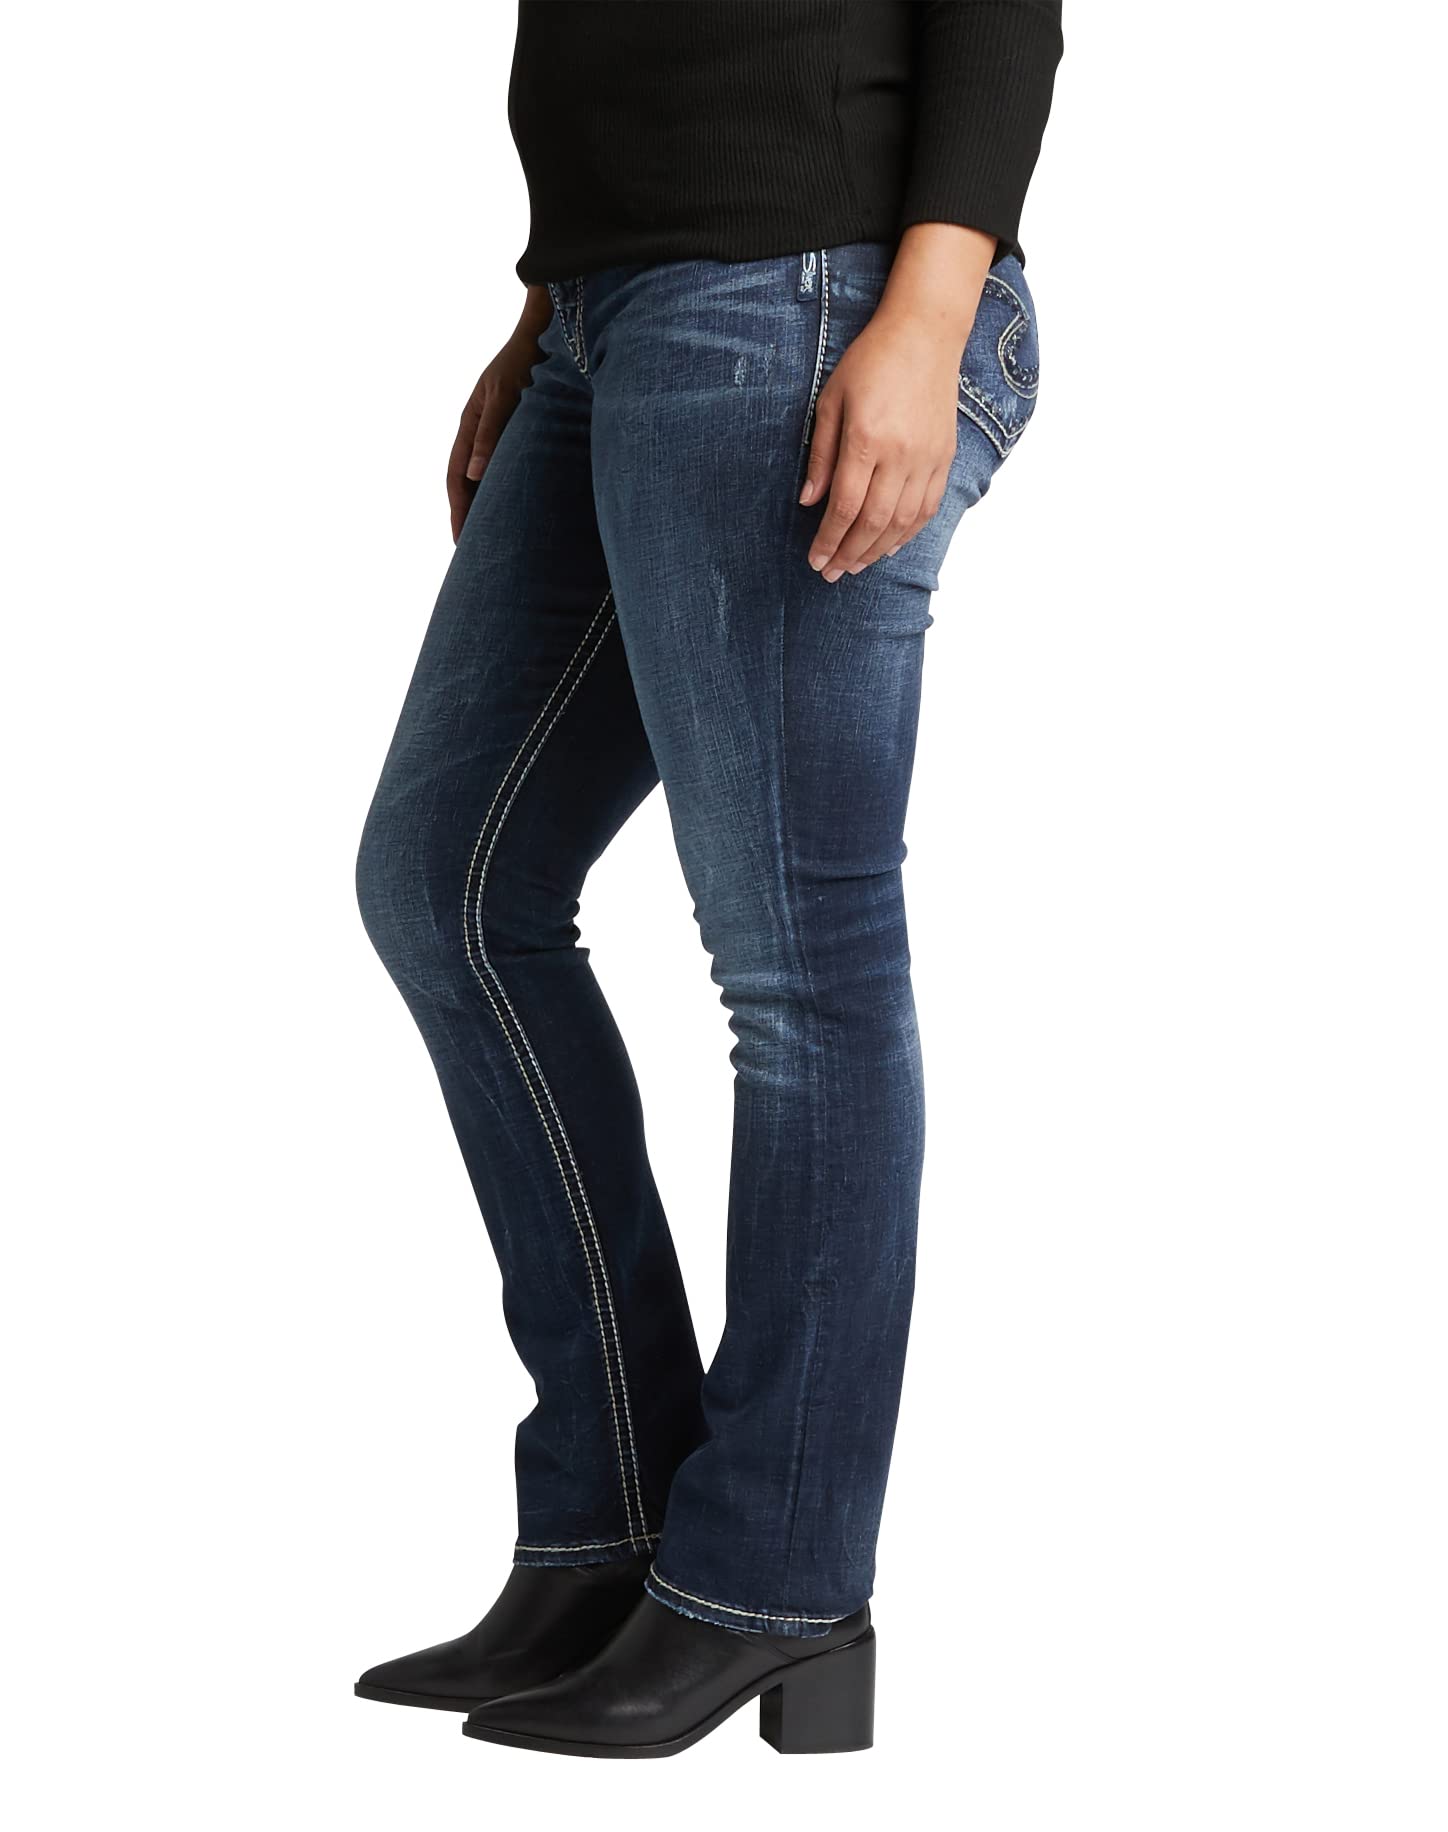 Silver Jeans Co. Women's Plus Size Suki Mid Rise Straight Leg Jeans